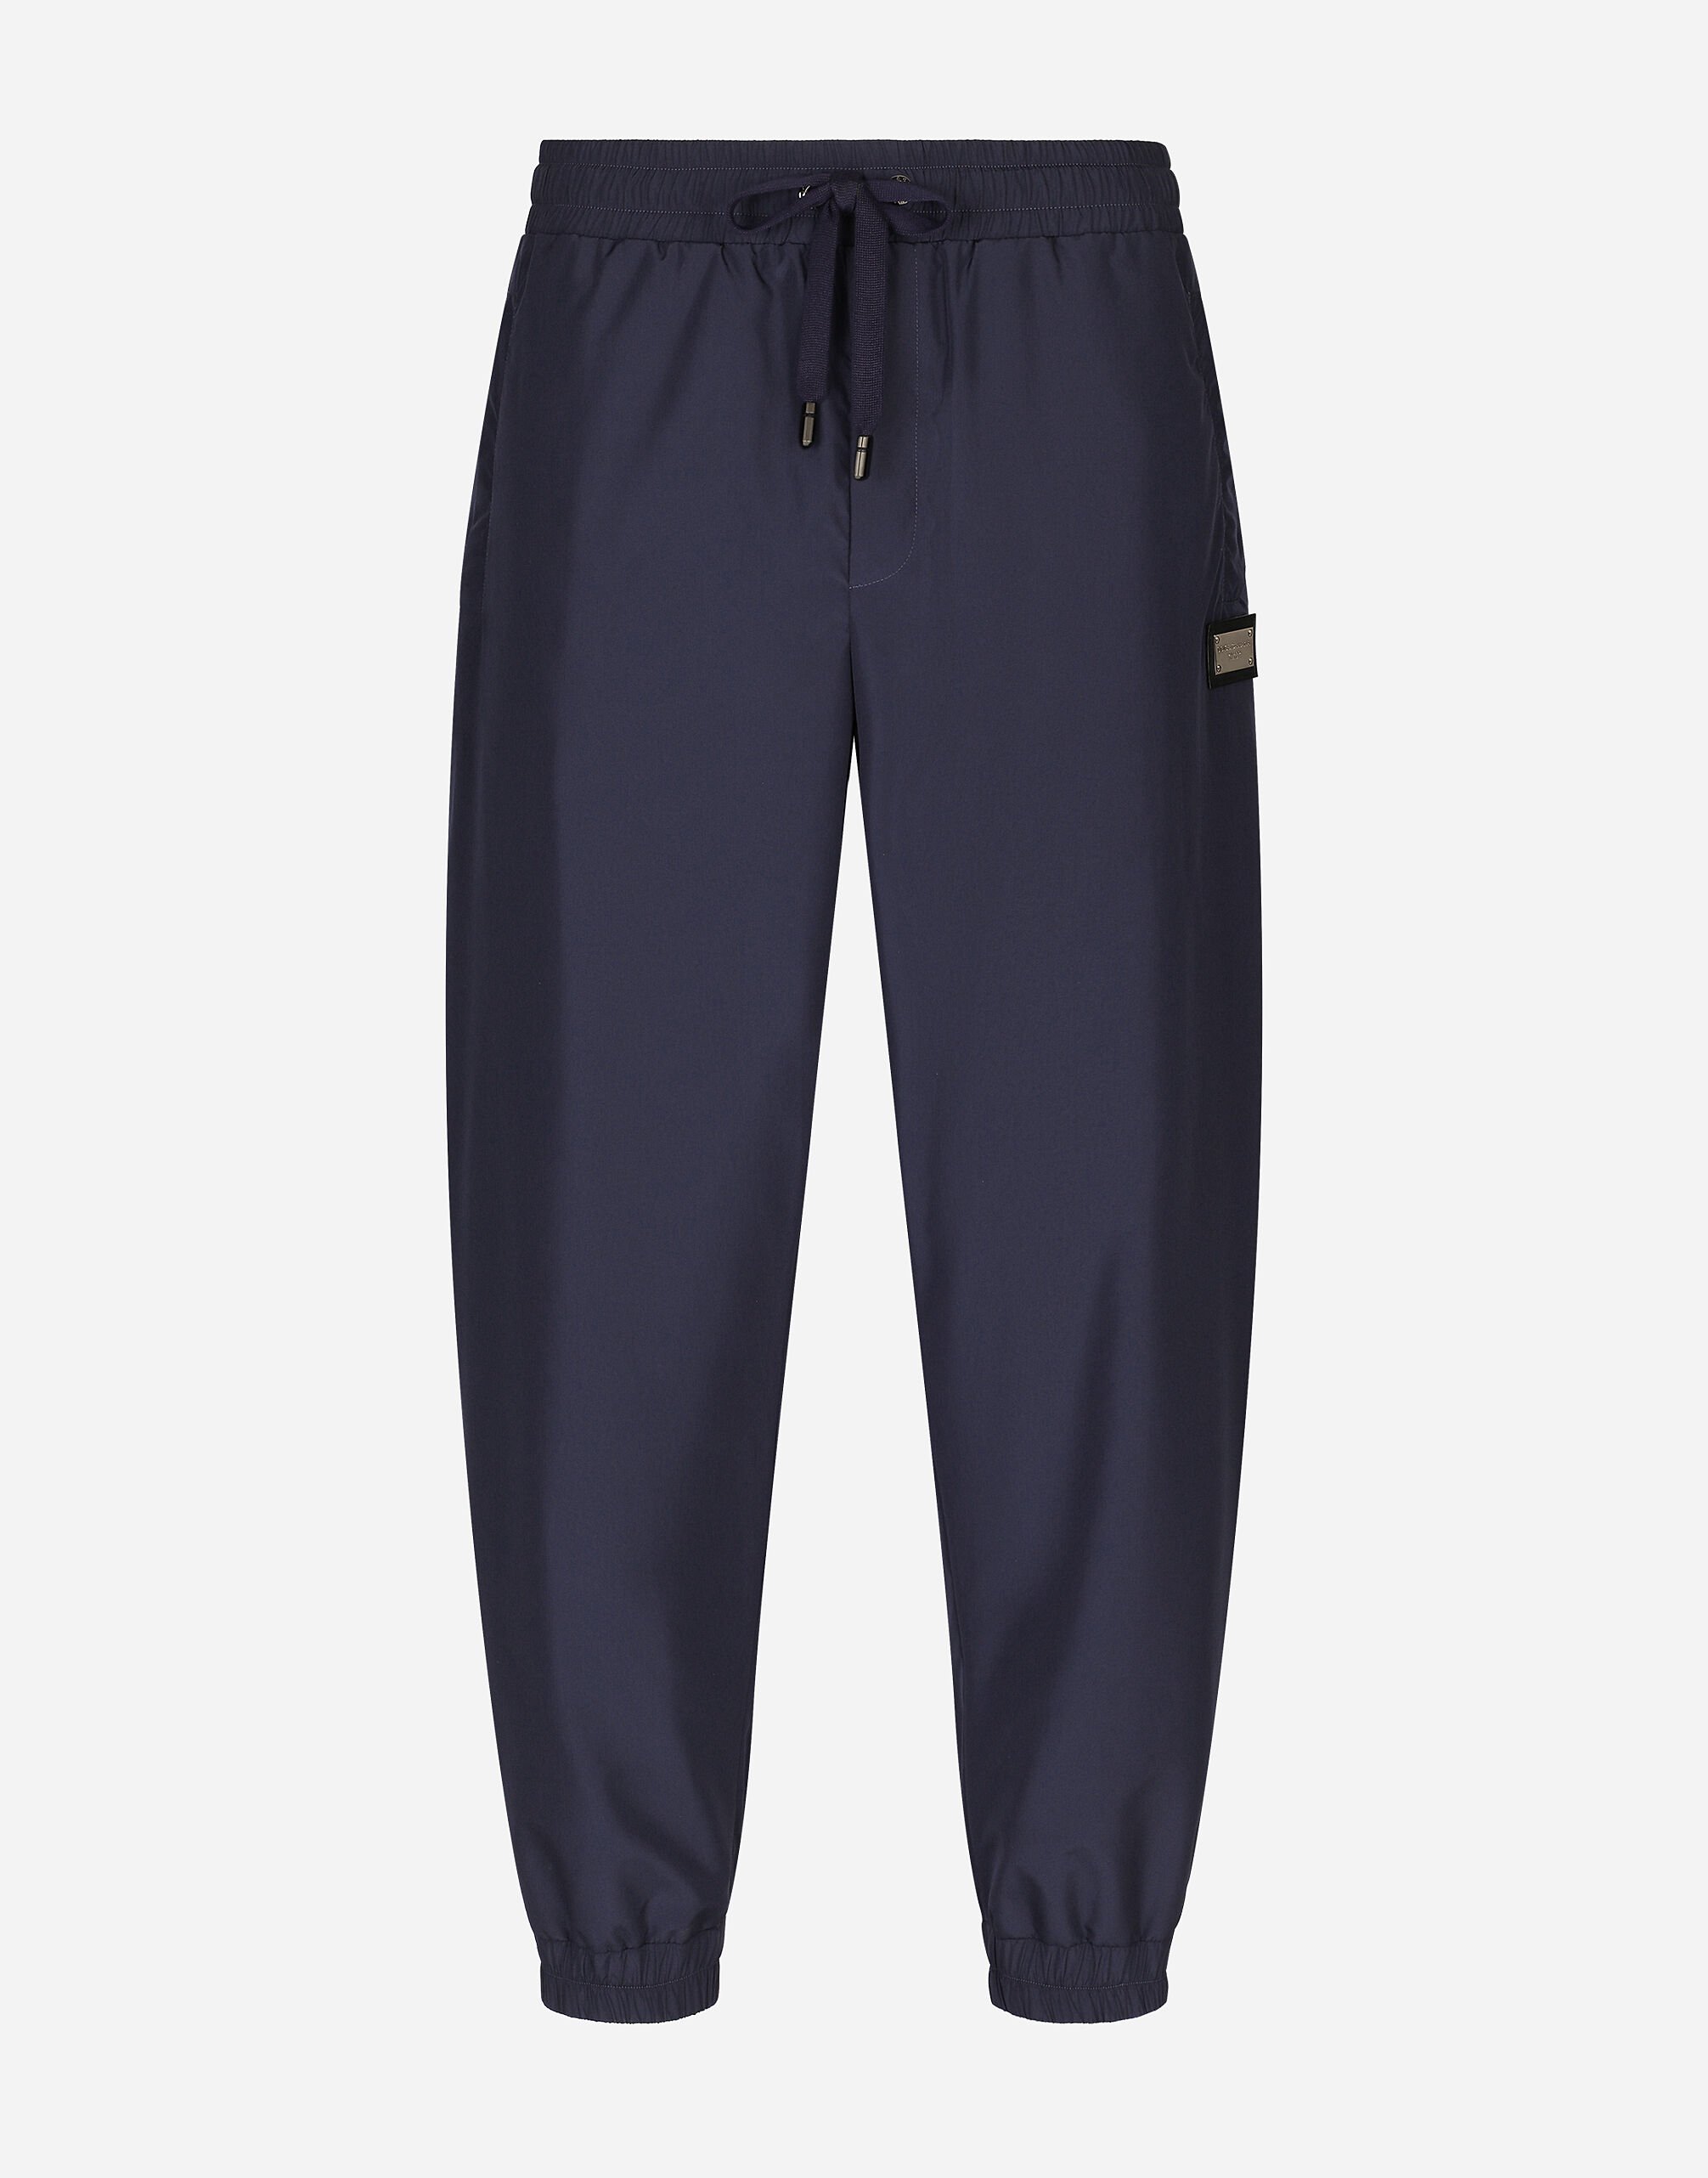 Dolce & Gabbana Nylon jogging pants with branded tag Black G9AHFTGG065